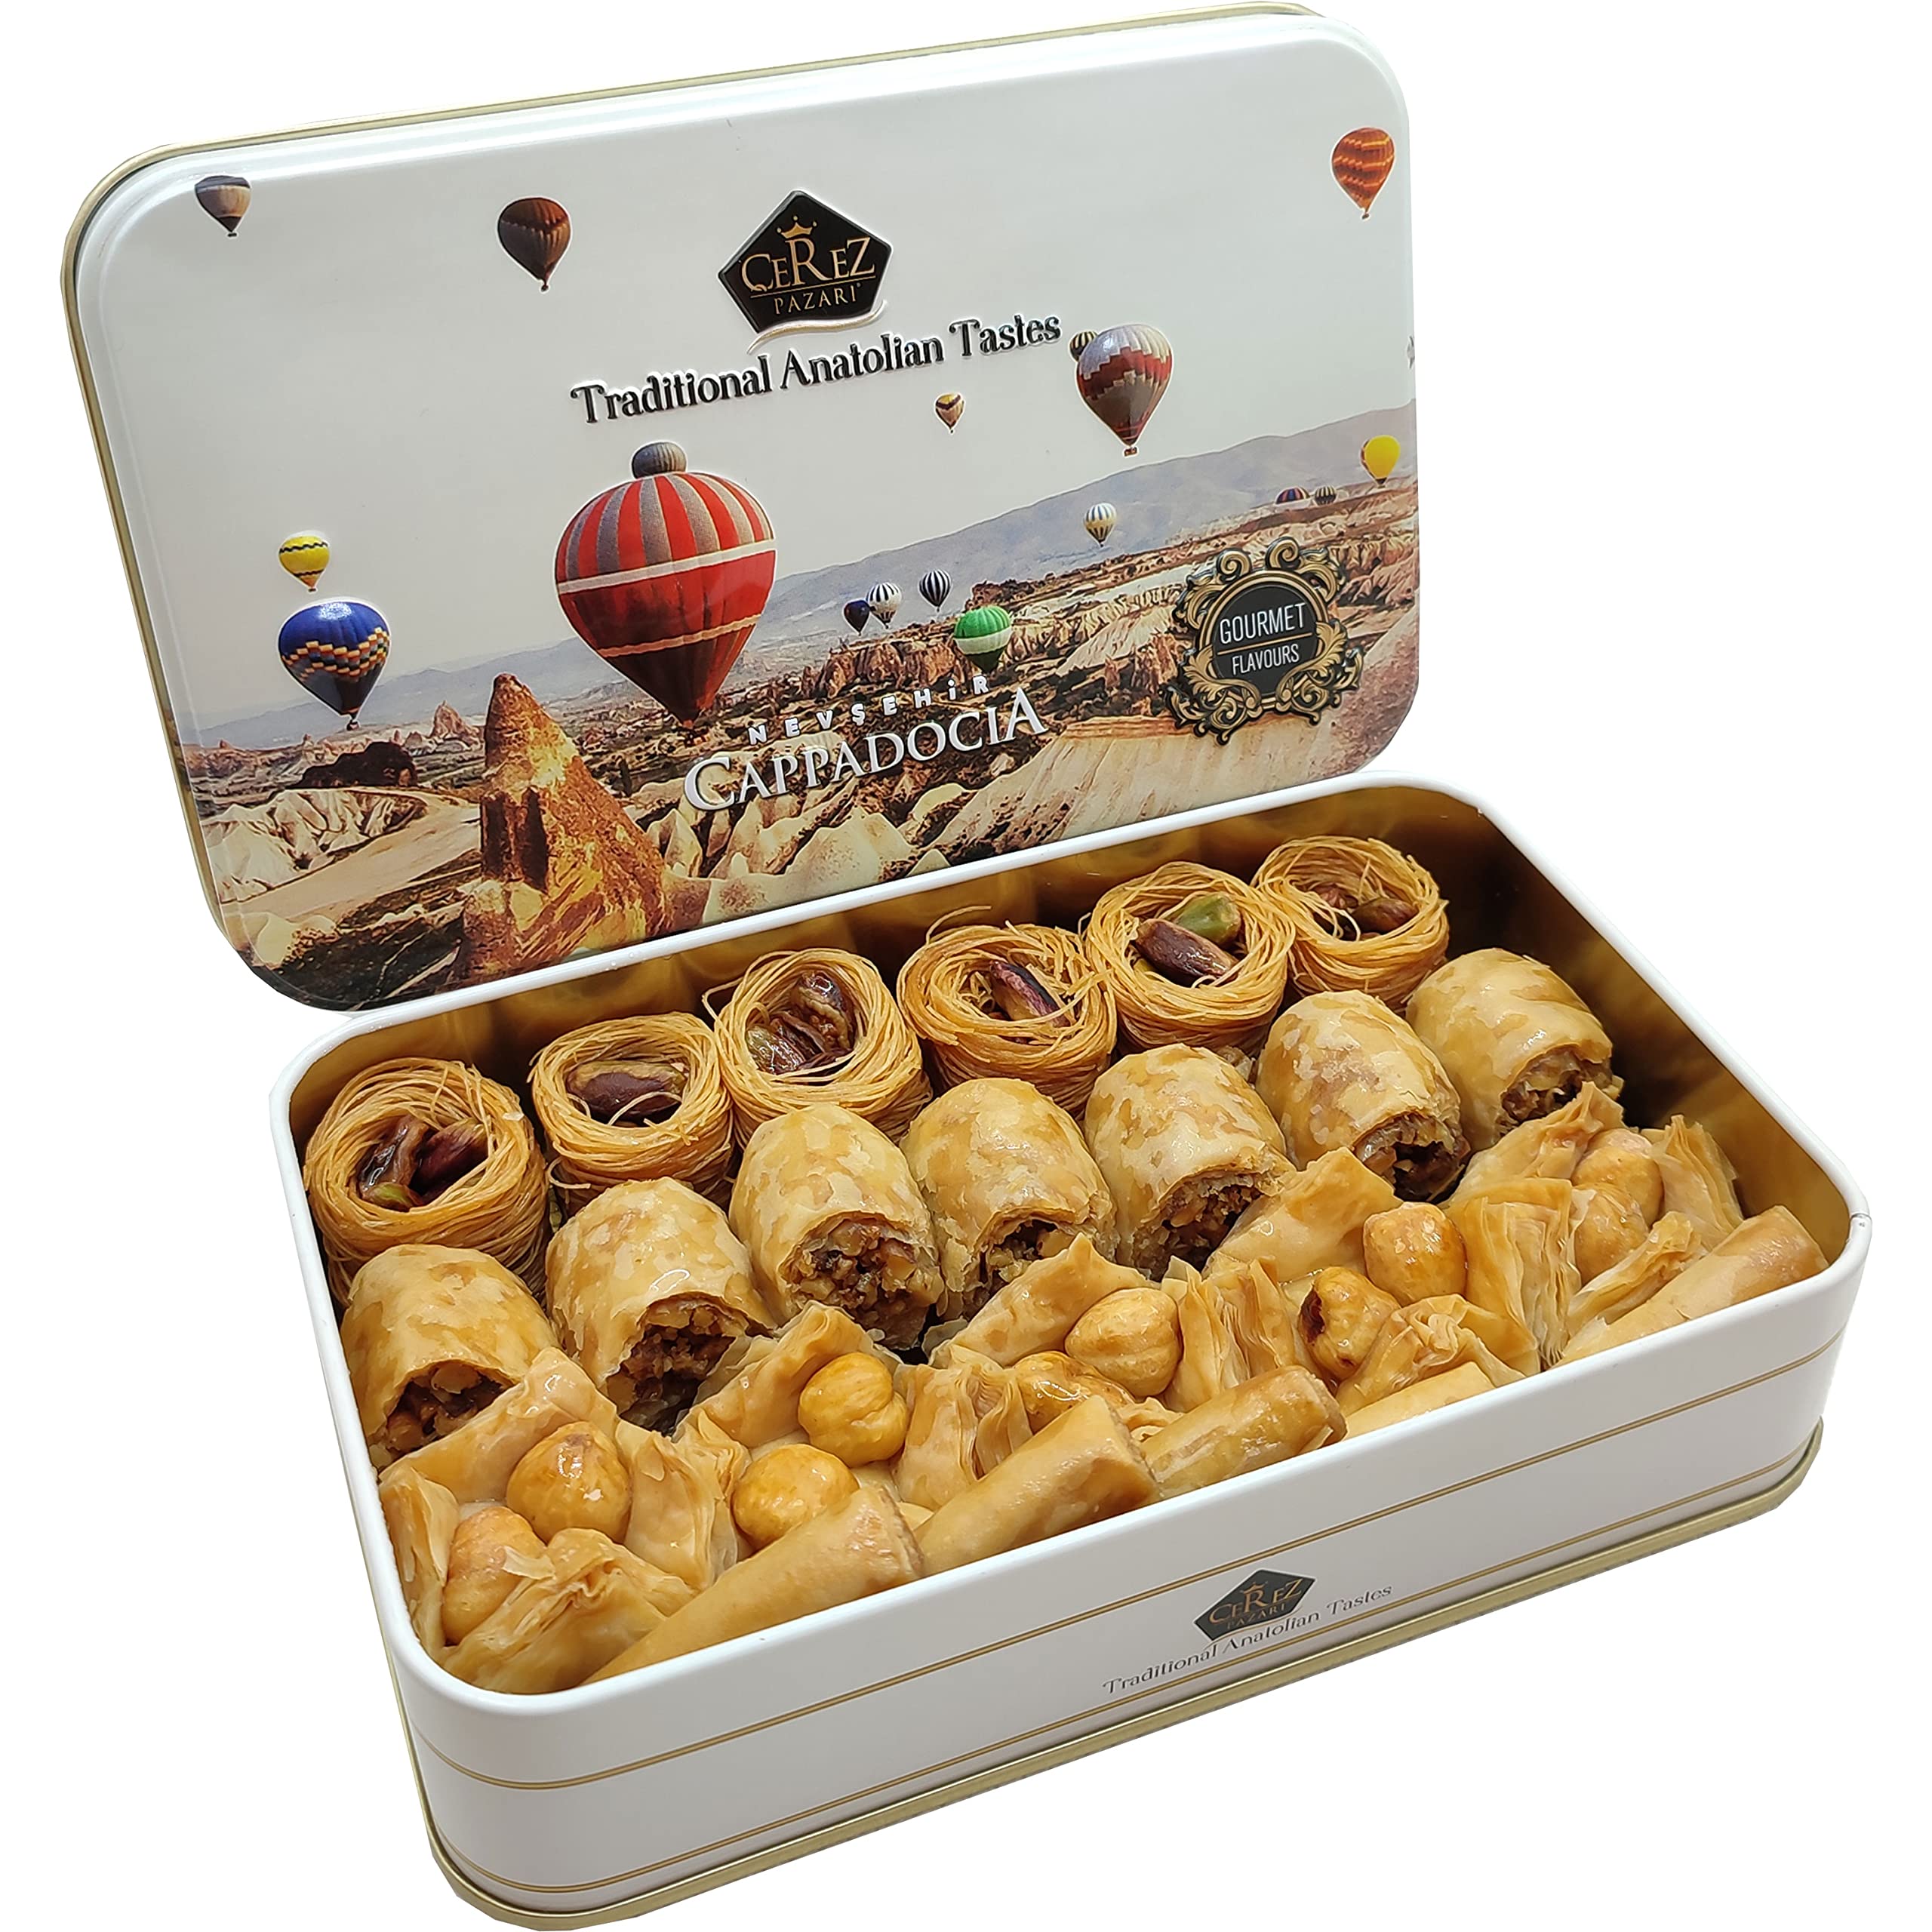 Cerez Pazari Premium Assorted Baklava Pastry Gift Basket Small Tin Box 8.47  oz Apprx.22-23